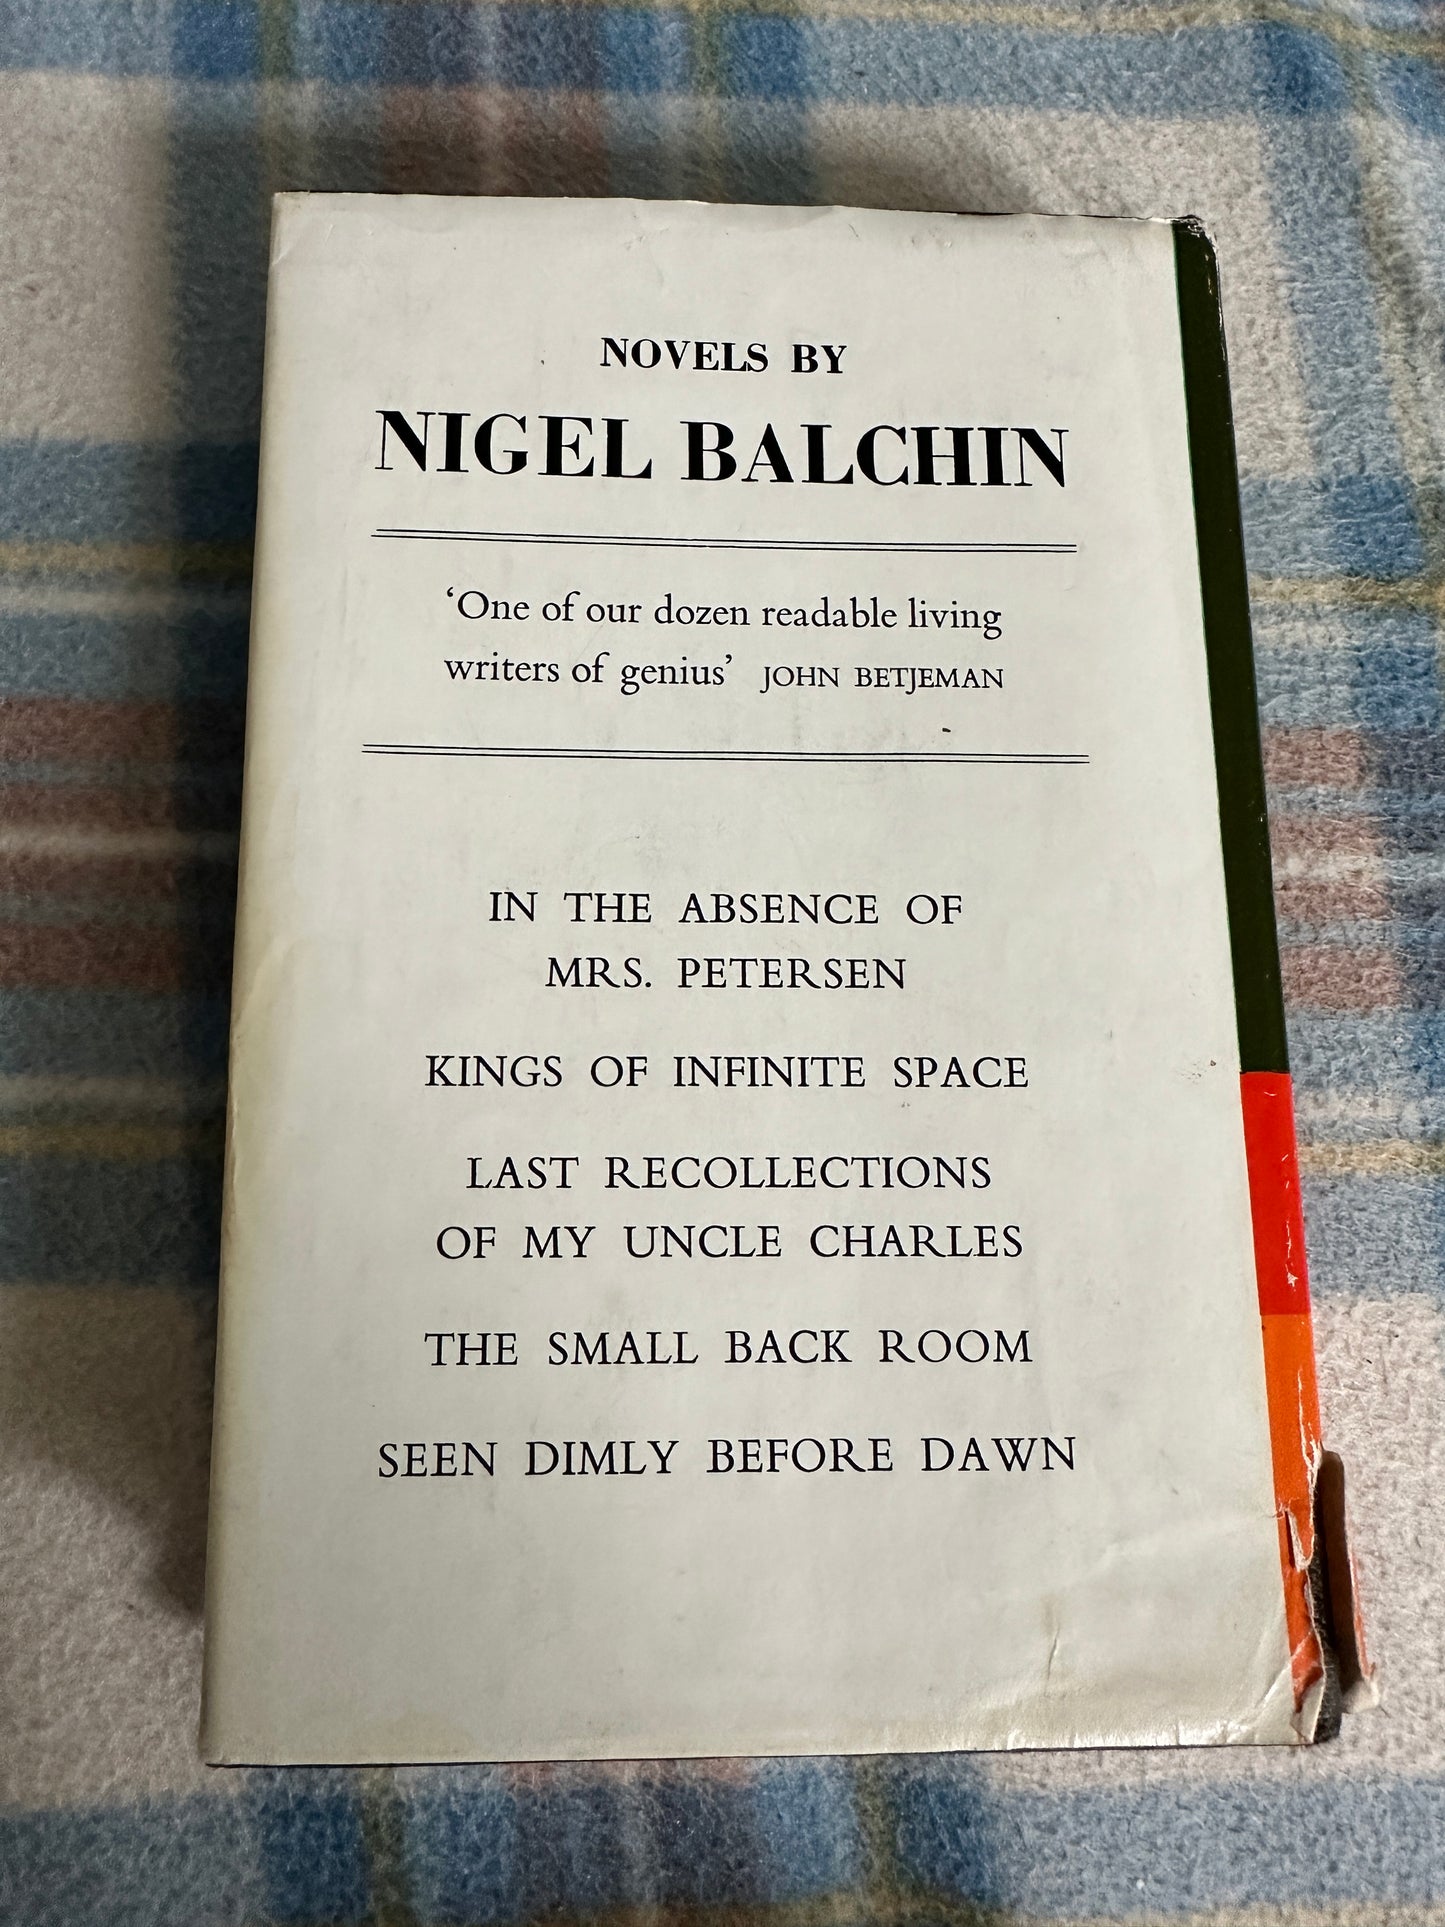 1970 A Way Through The Wood - Nigel Balchin(Collins)